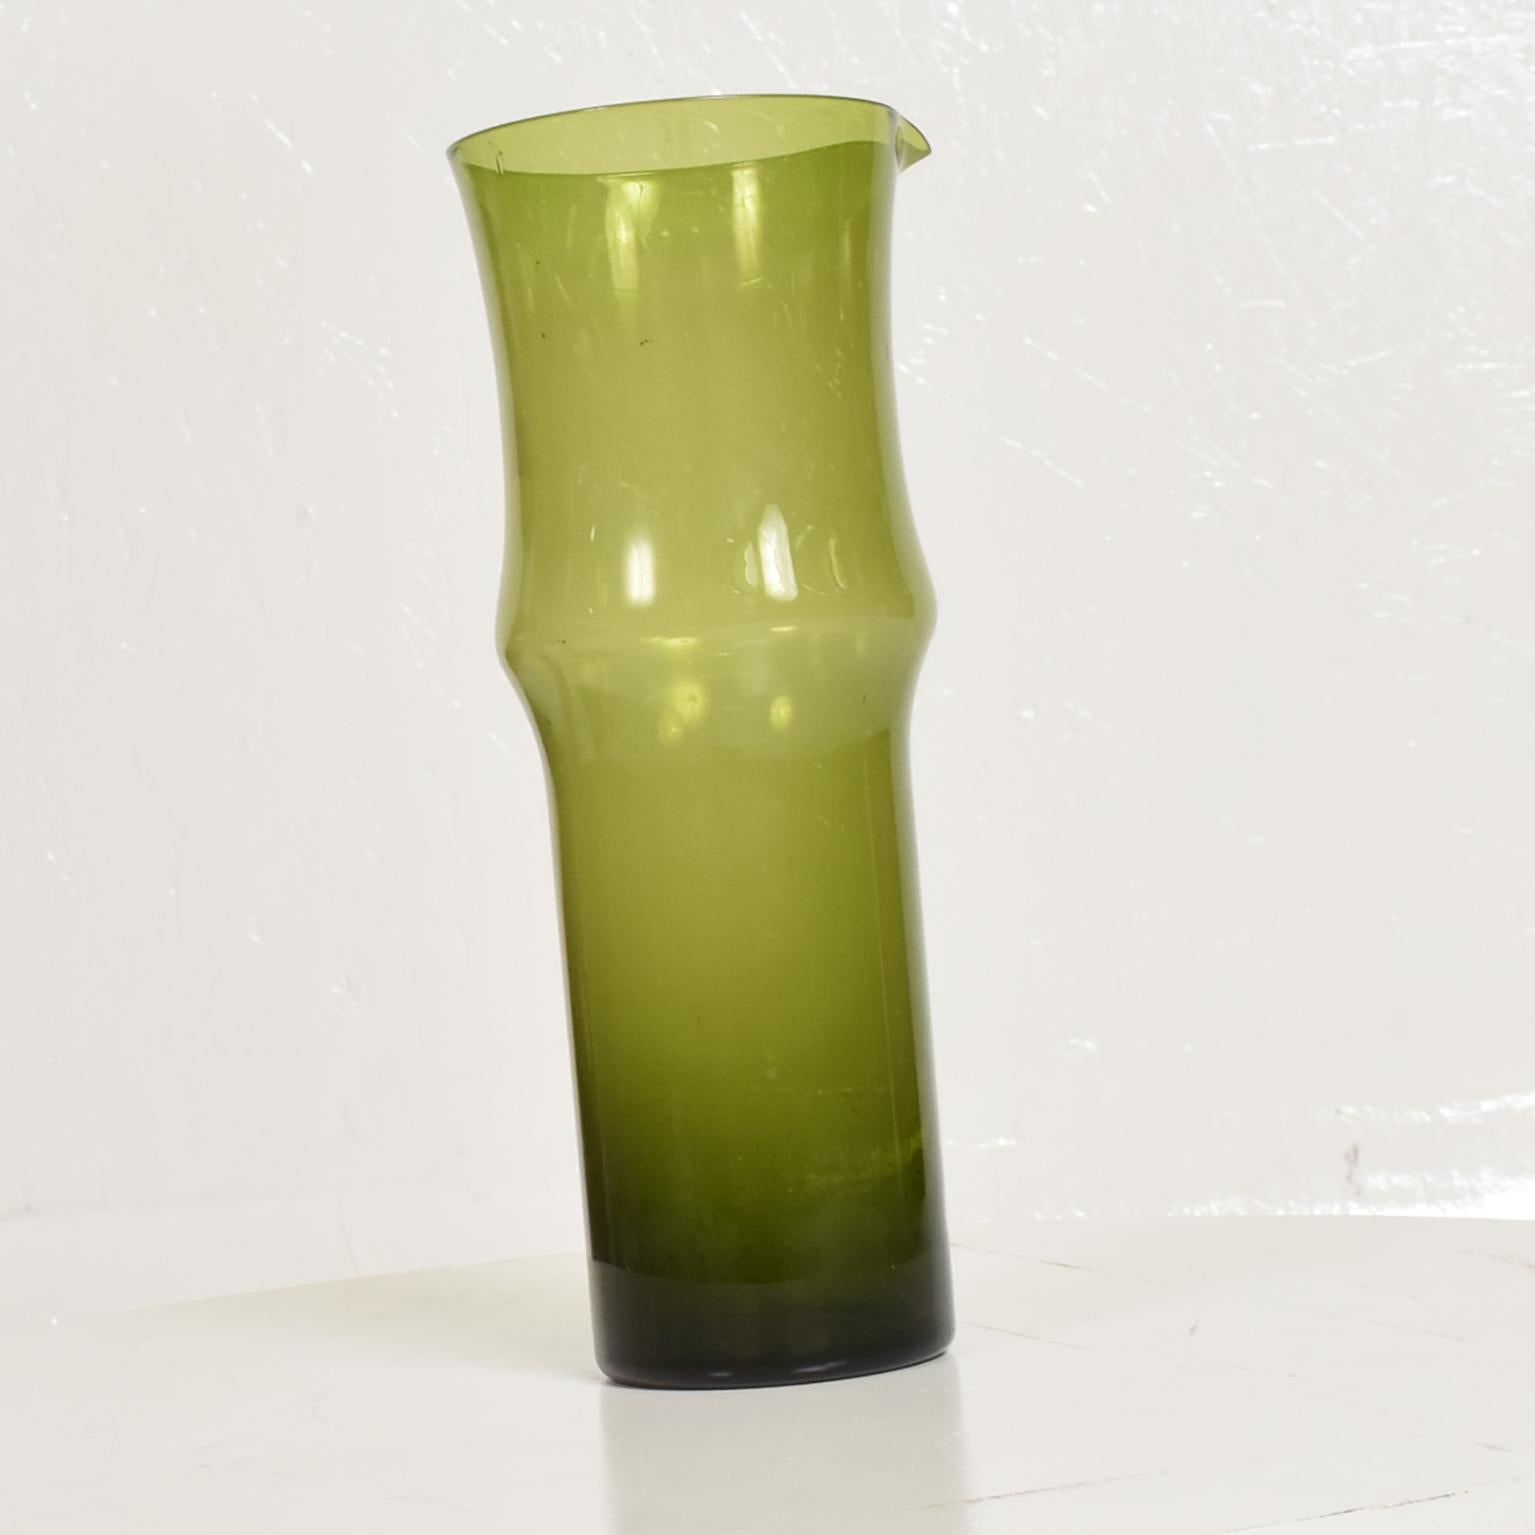 Scandinavian Modern Green Glass Pitcher Vase by Tapio Wirkkala for Iittala Midcentury Danish Modern